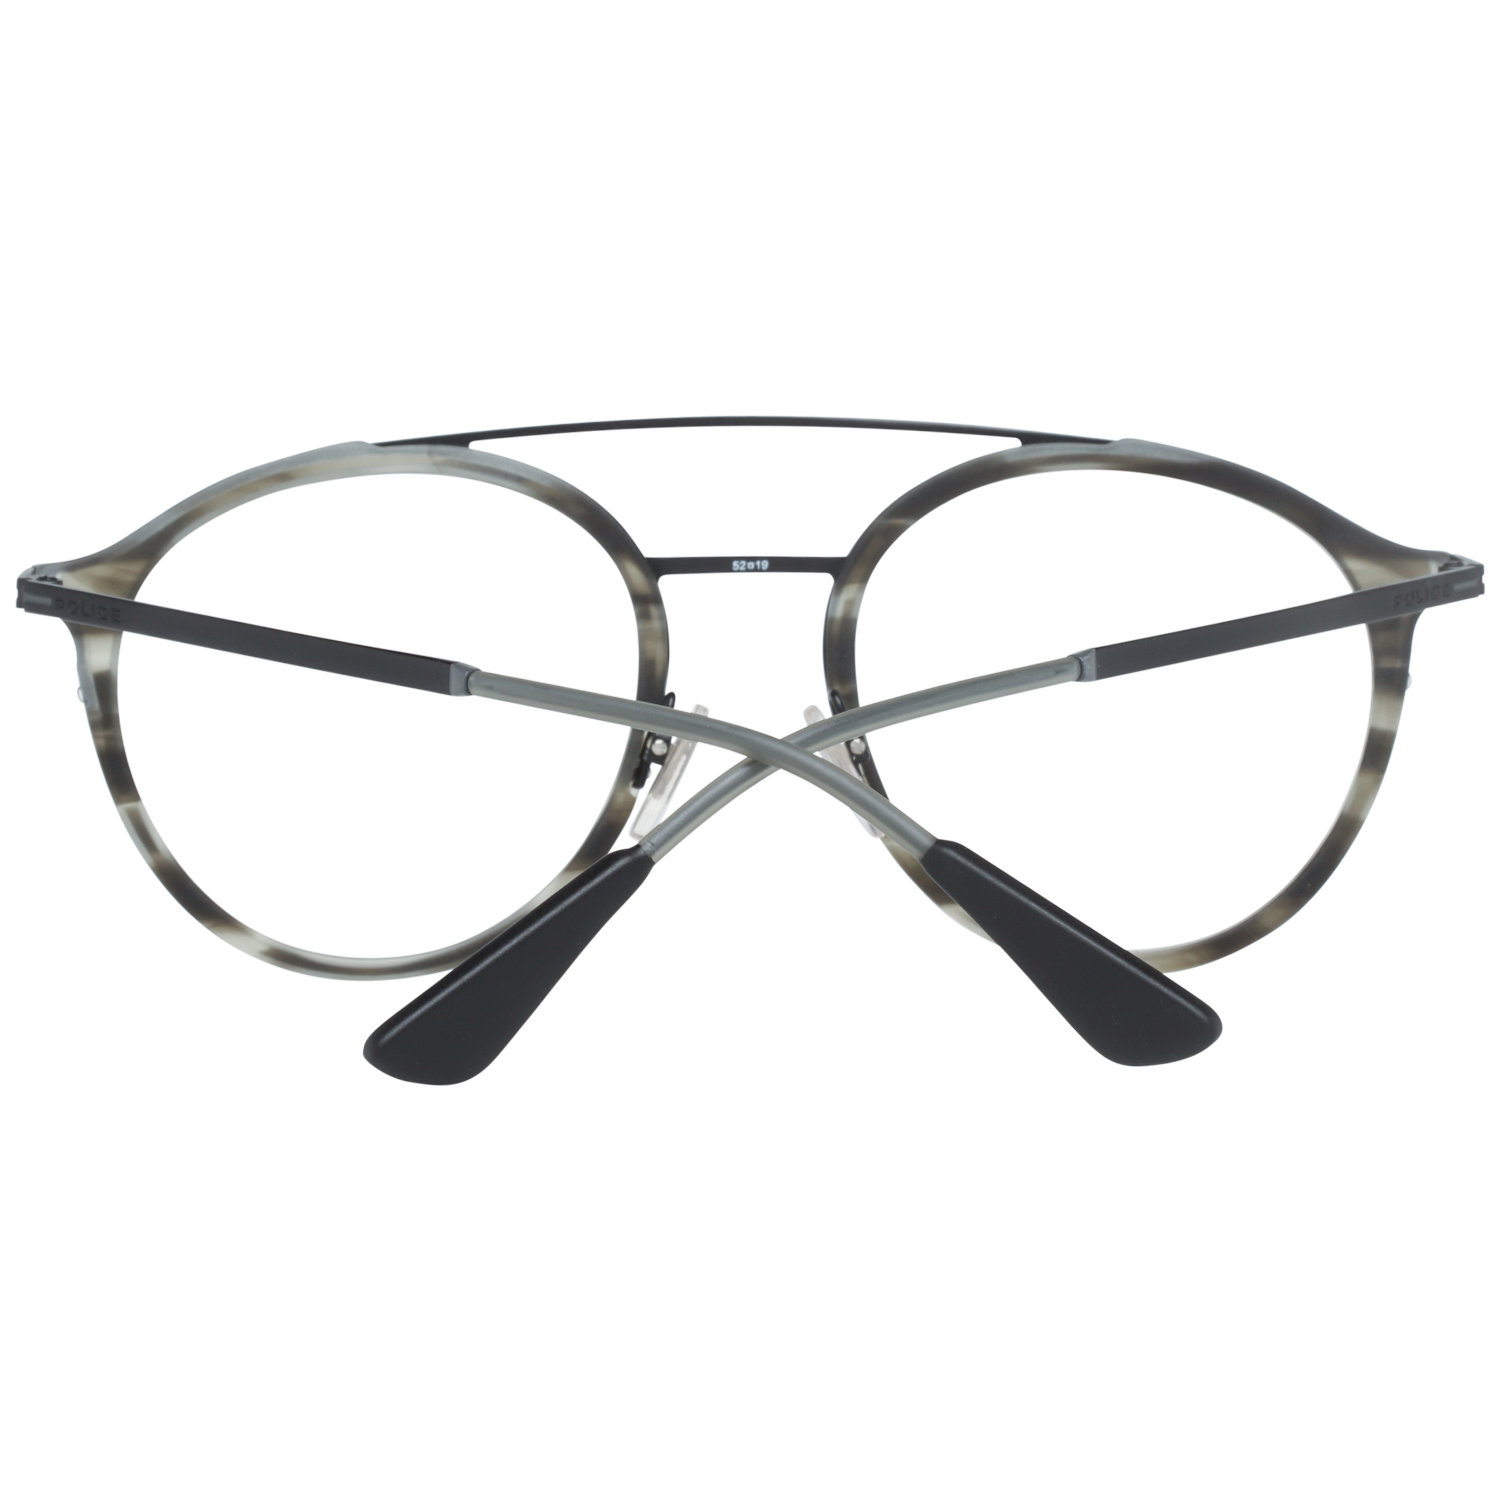 Police Frames Police Glasses Frames VPL688M 4ATM 52 Eyeglasses Eyewear UK USA Australia 